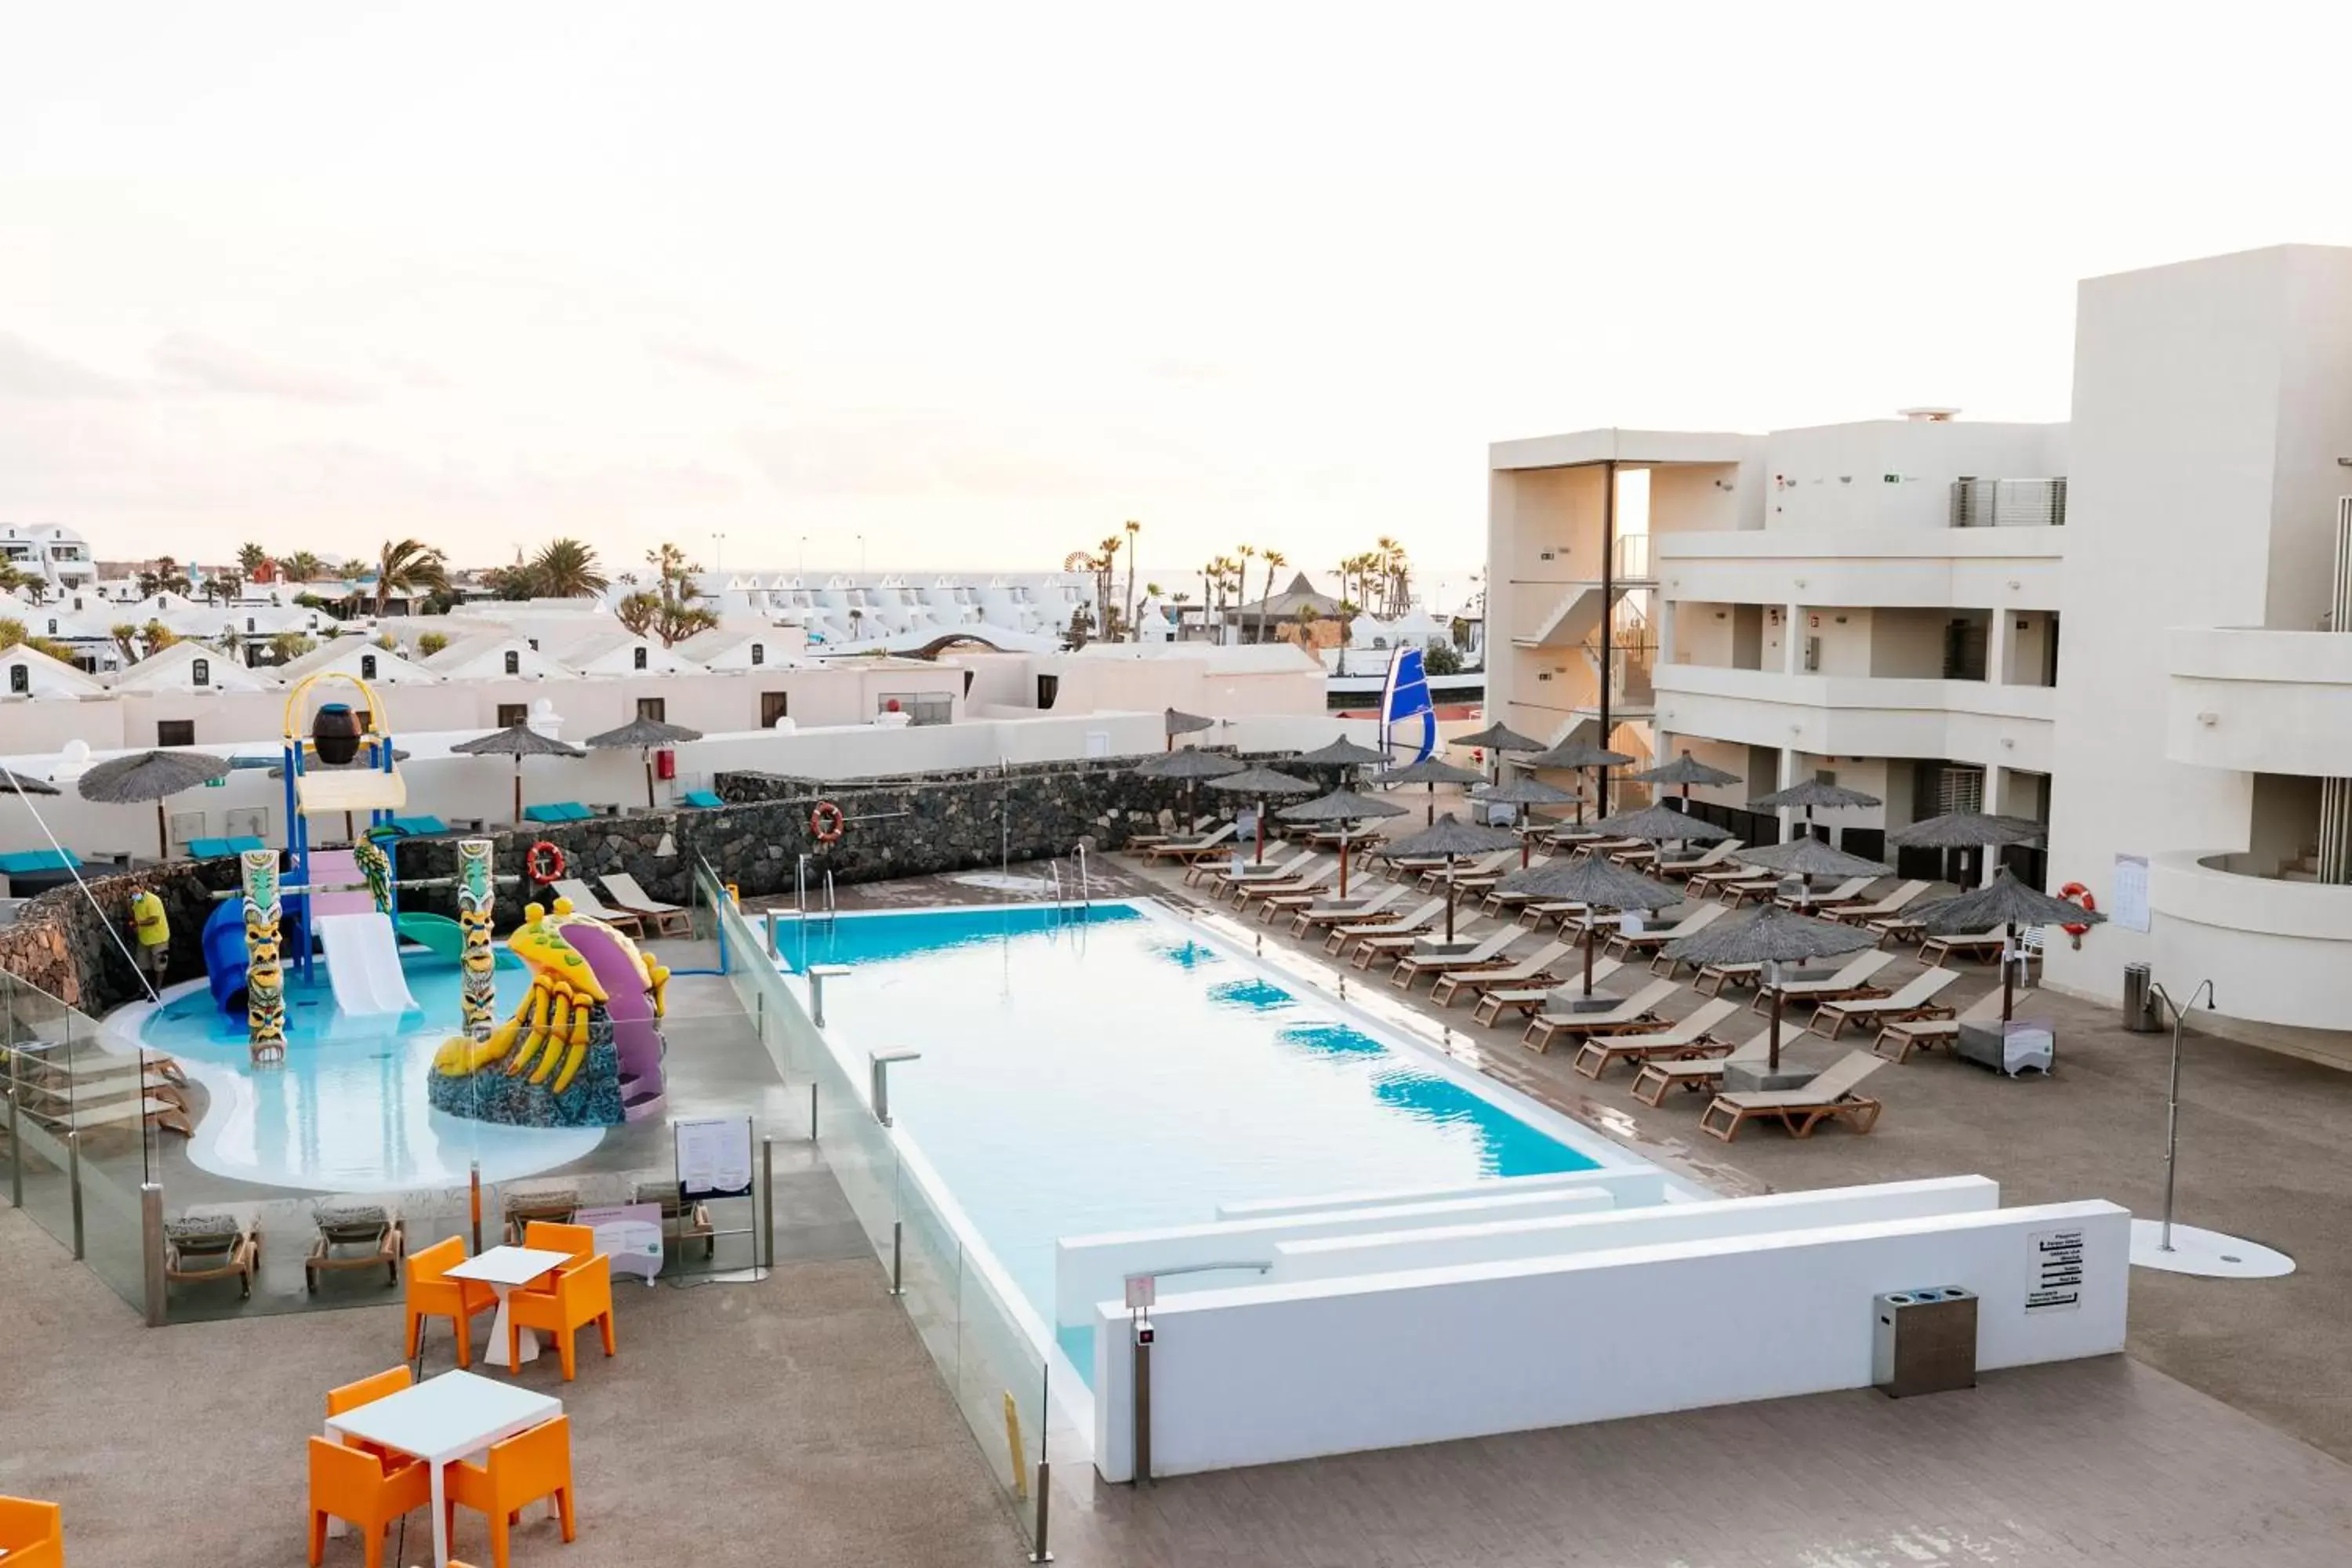 Pool View in HD Beach Resort